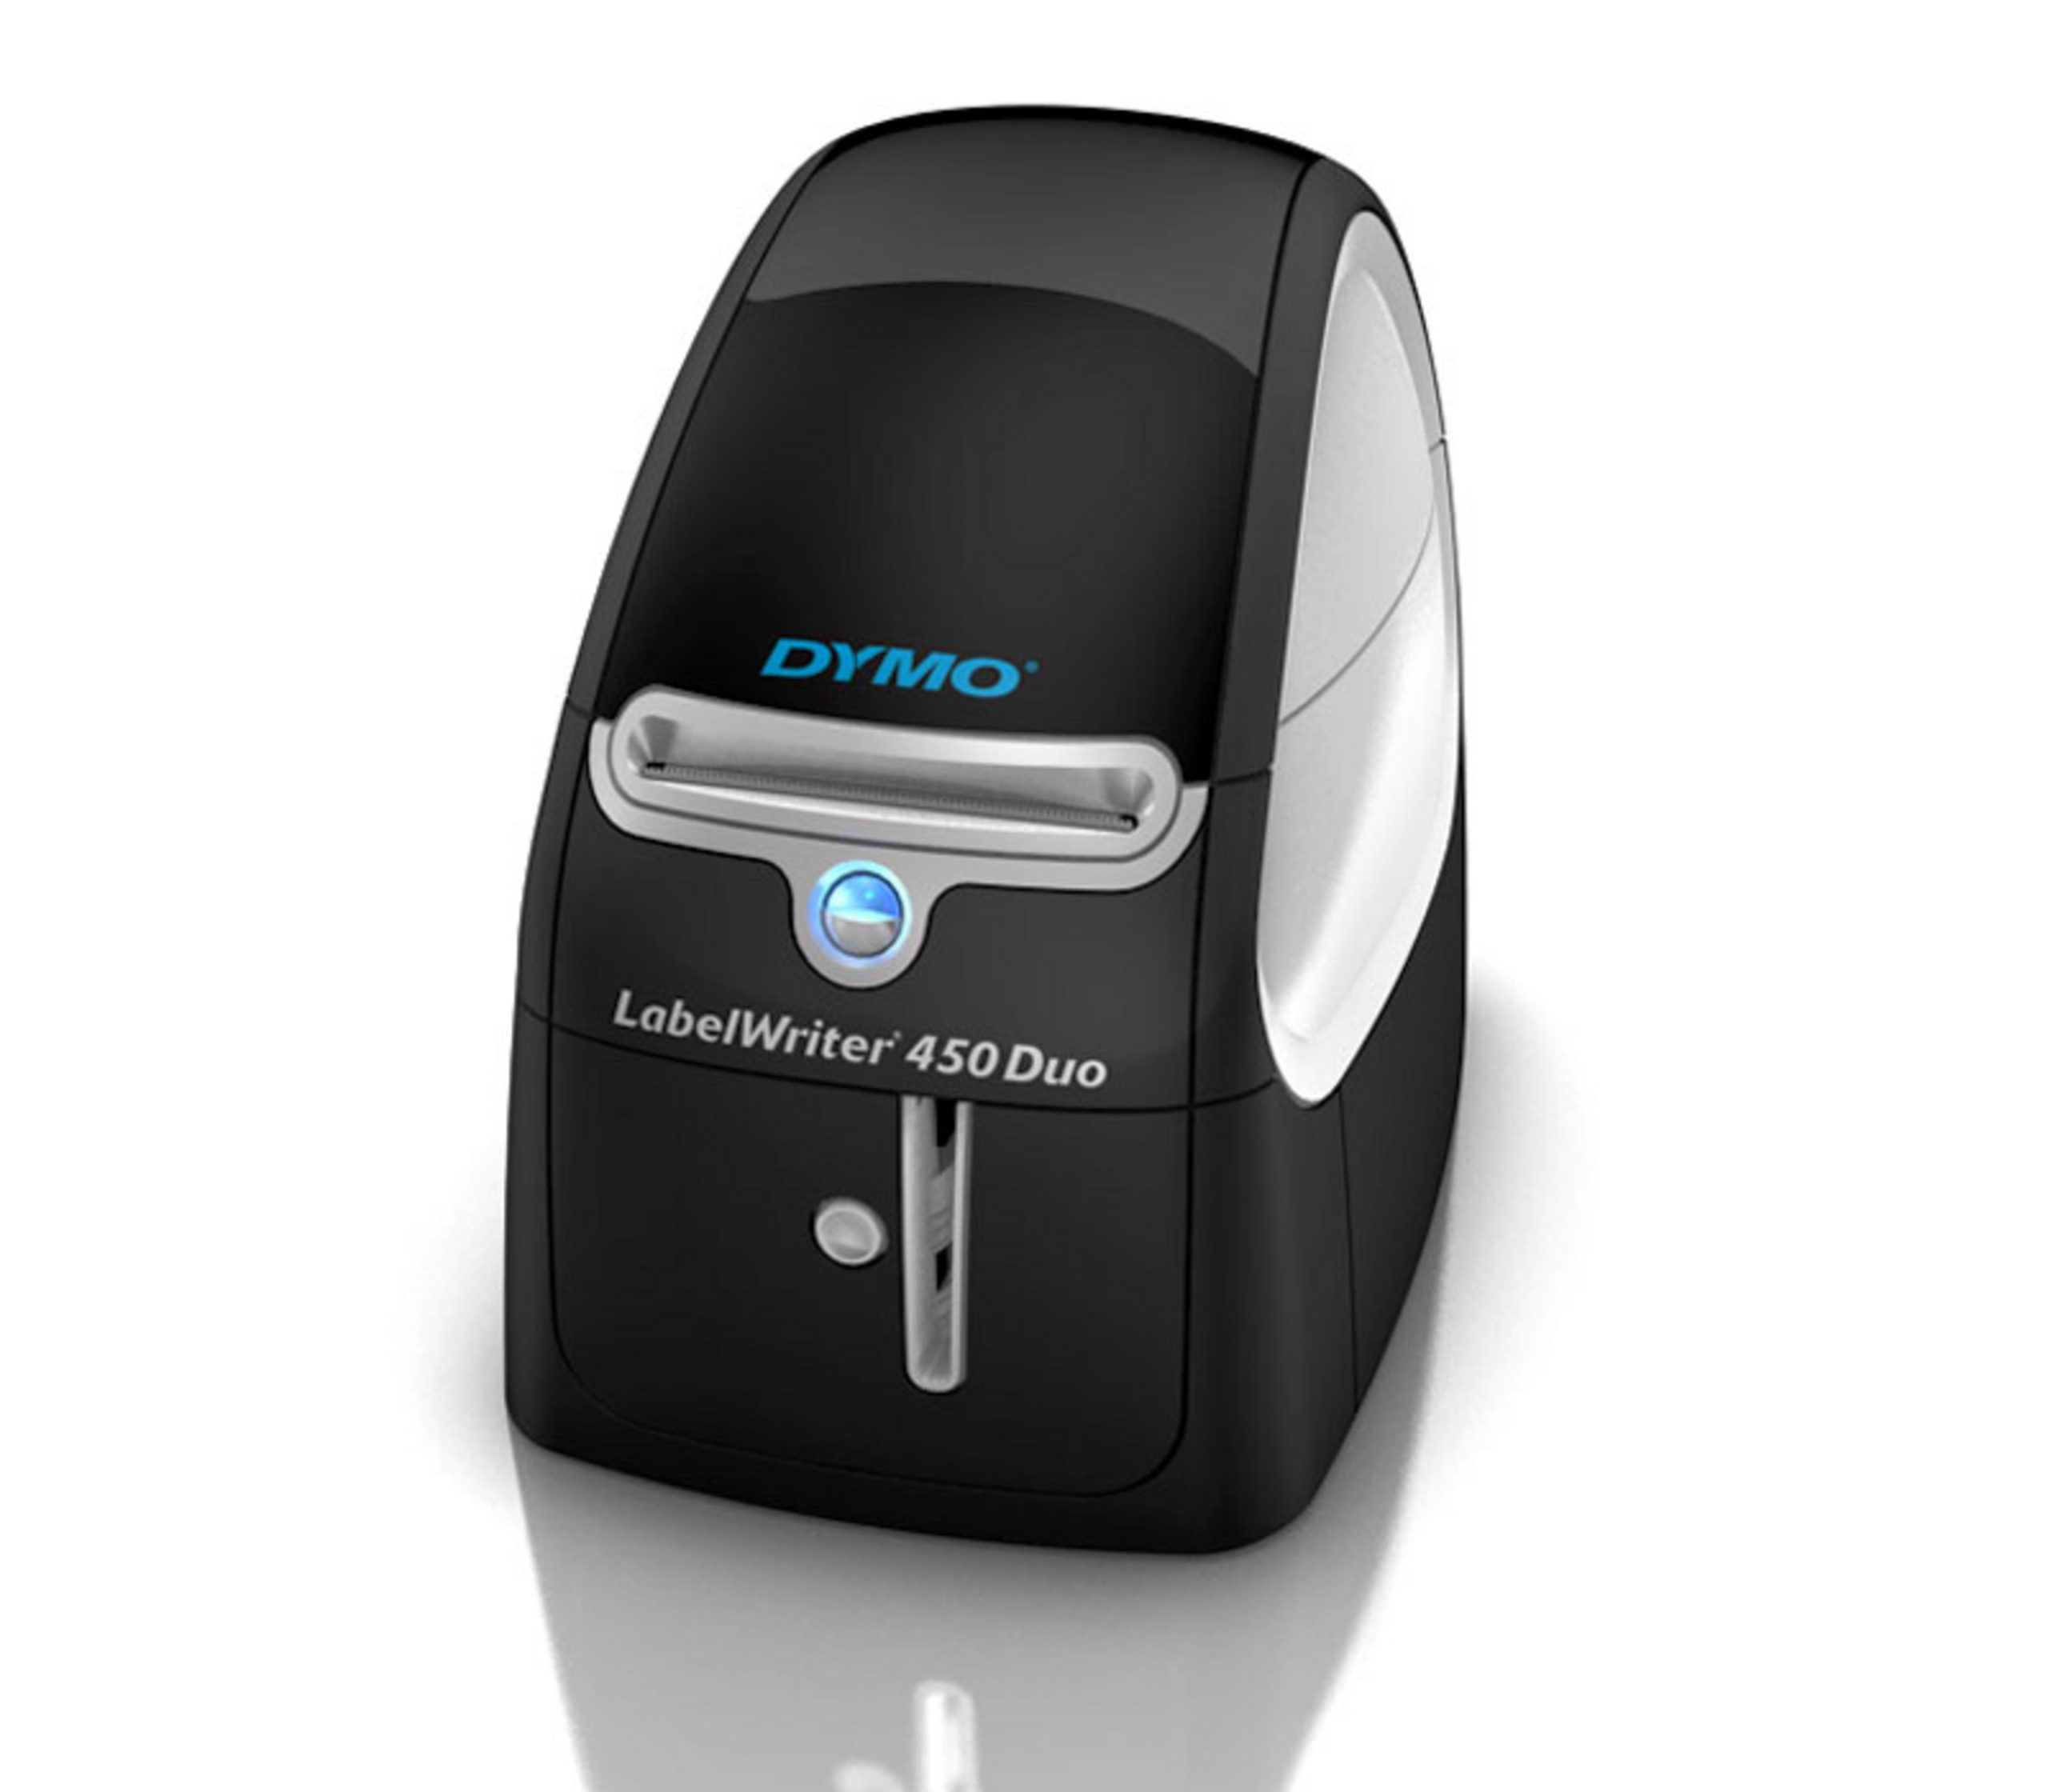 DYMO LabelWriter 450 DUO - DYMO South Africa